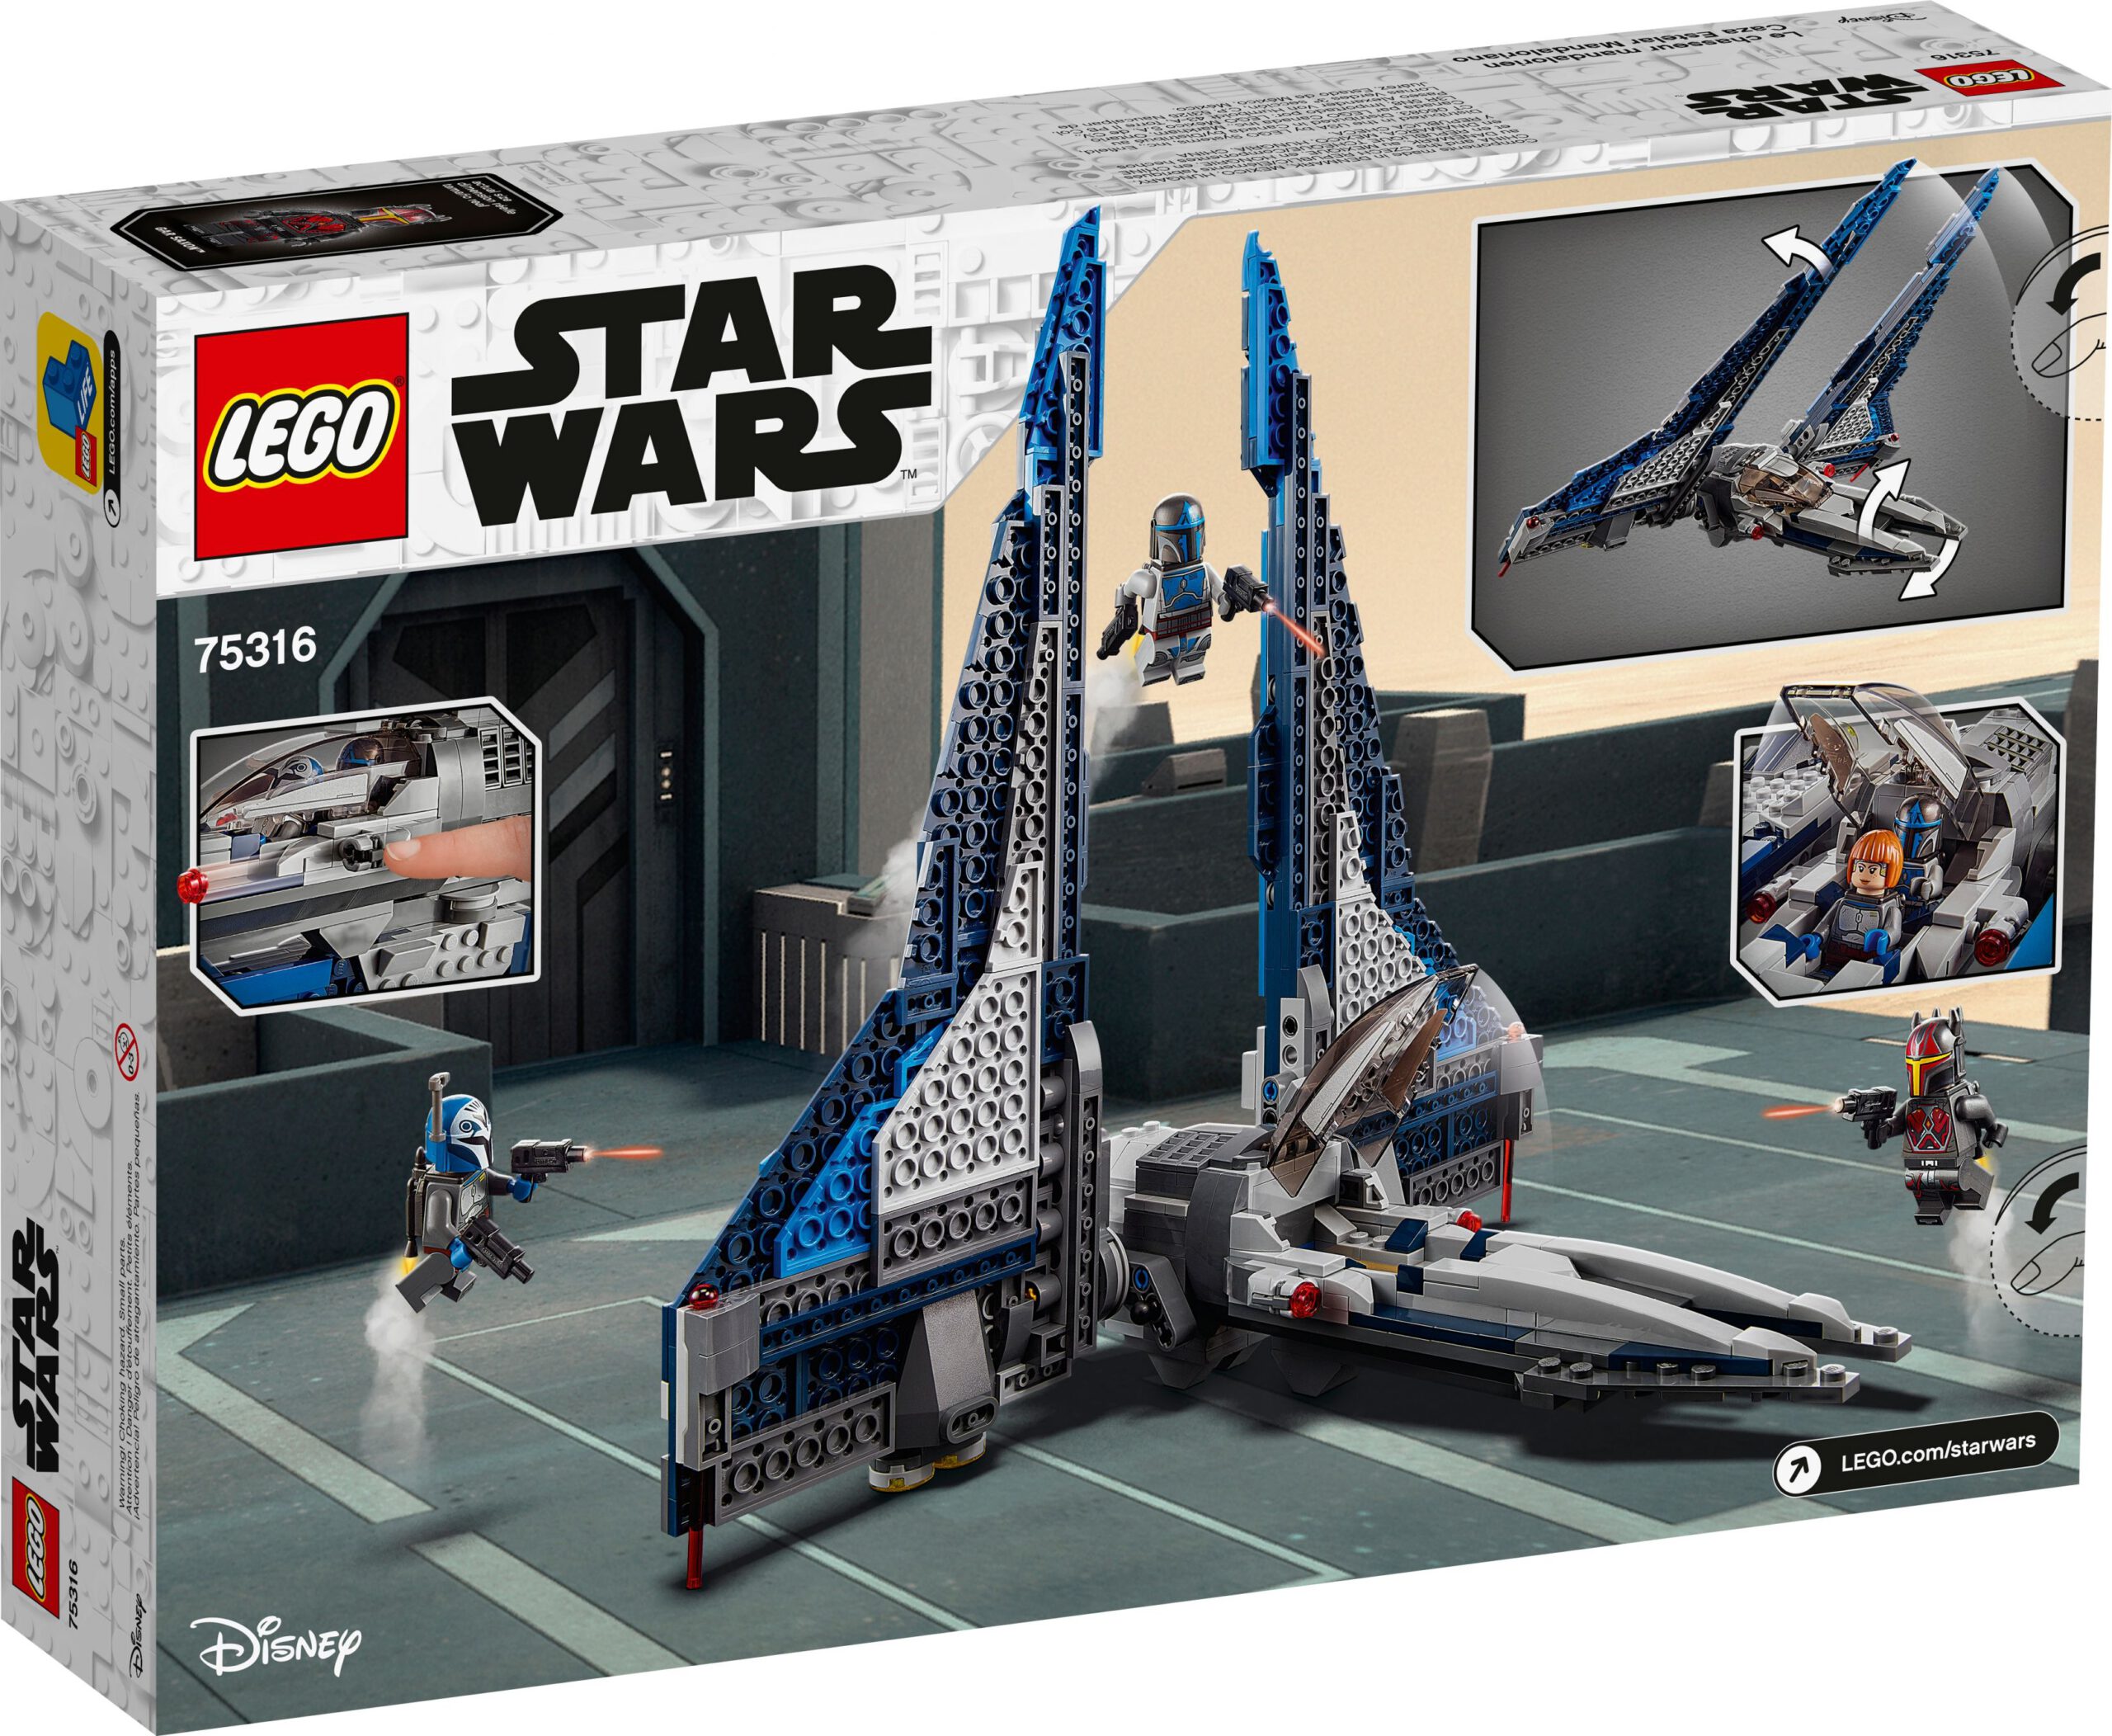 LEGO® Star Wars 75316 Mandalorian Starfighter™